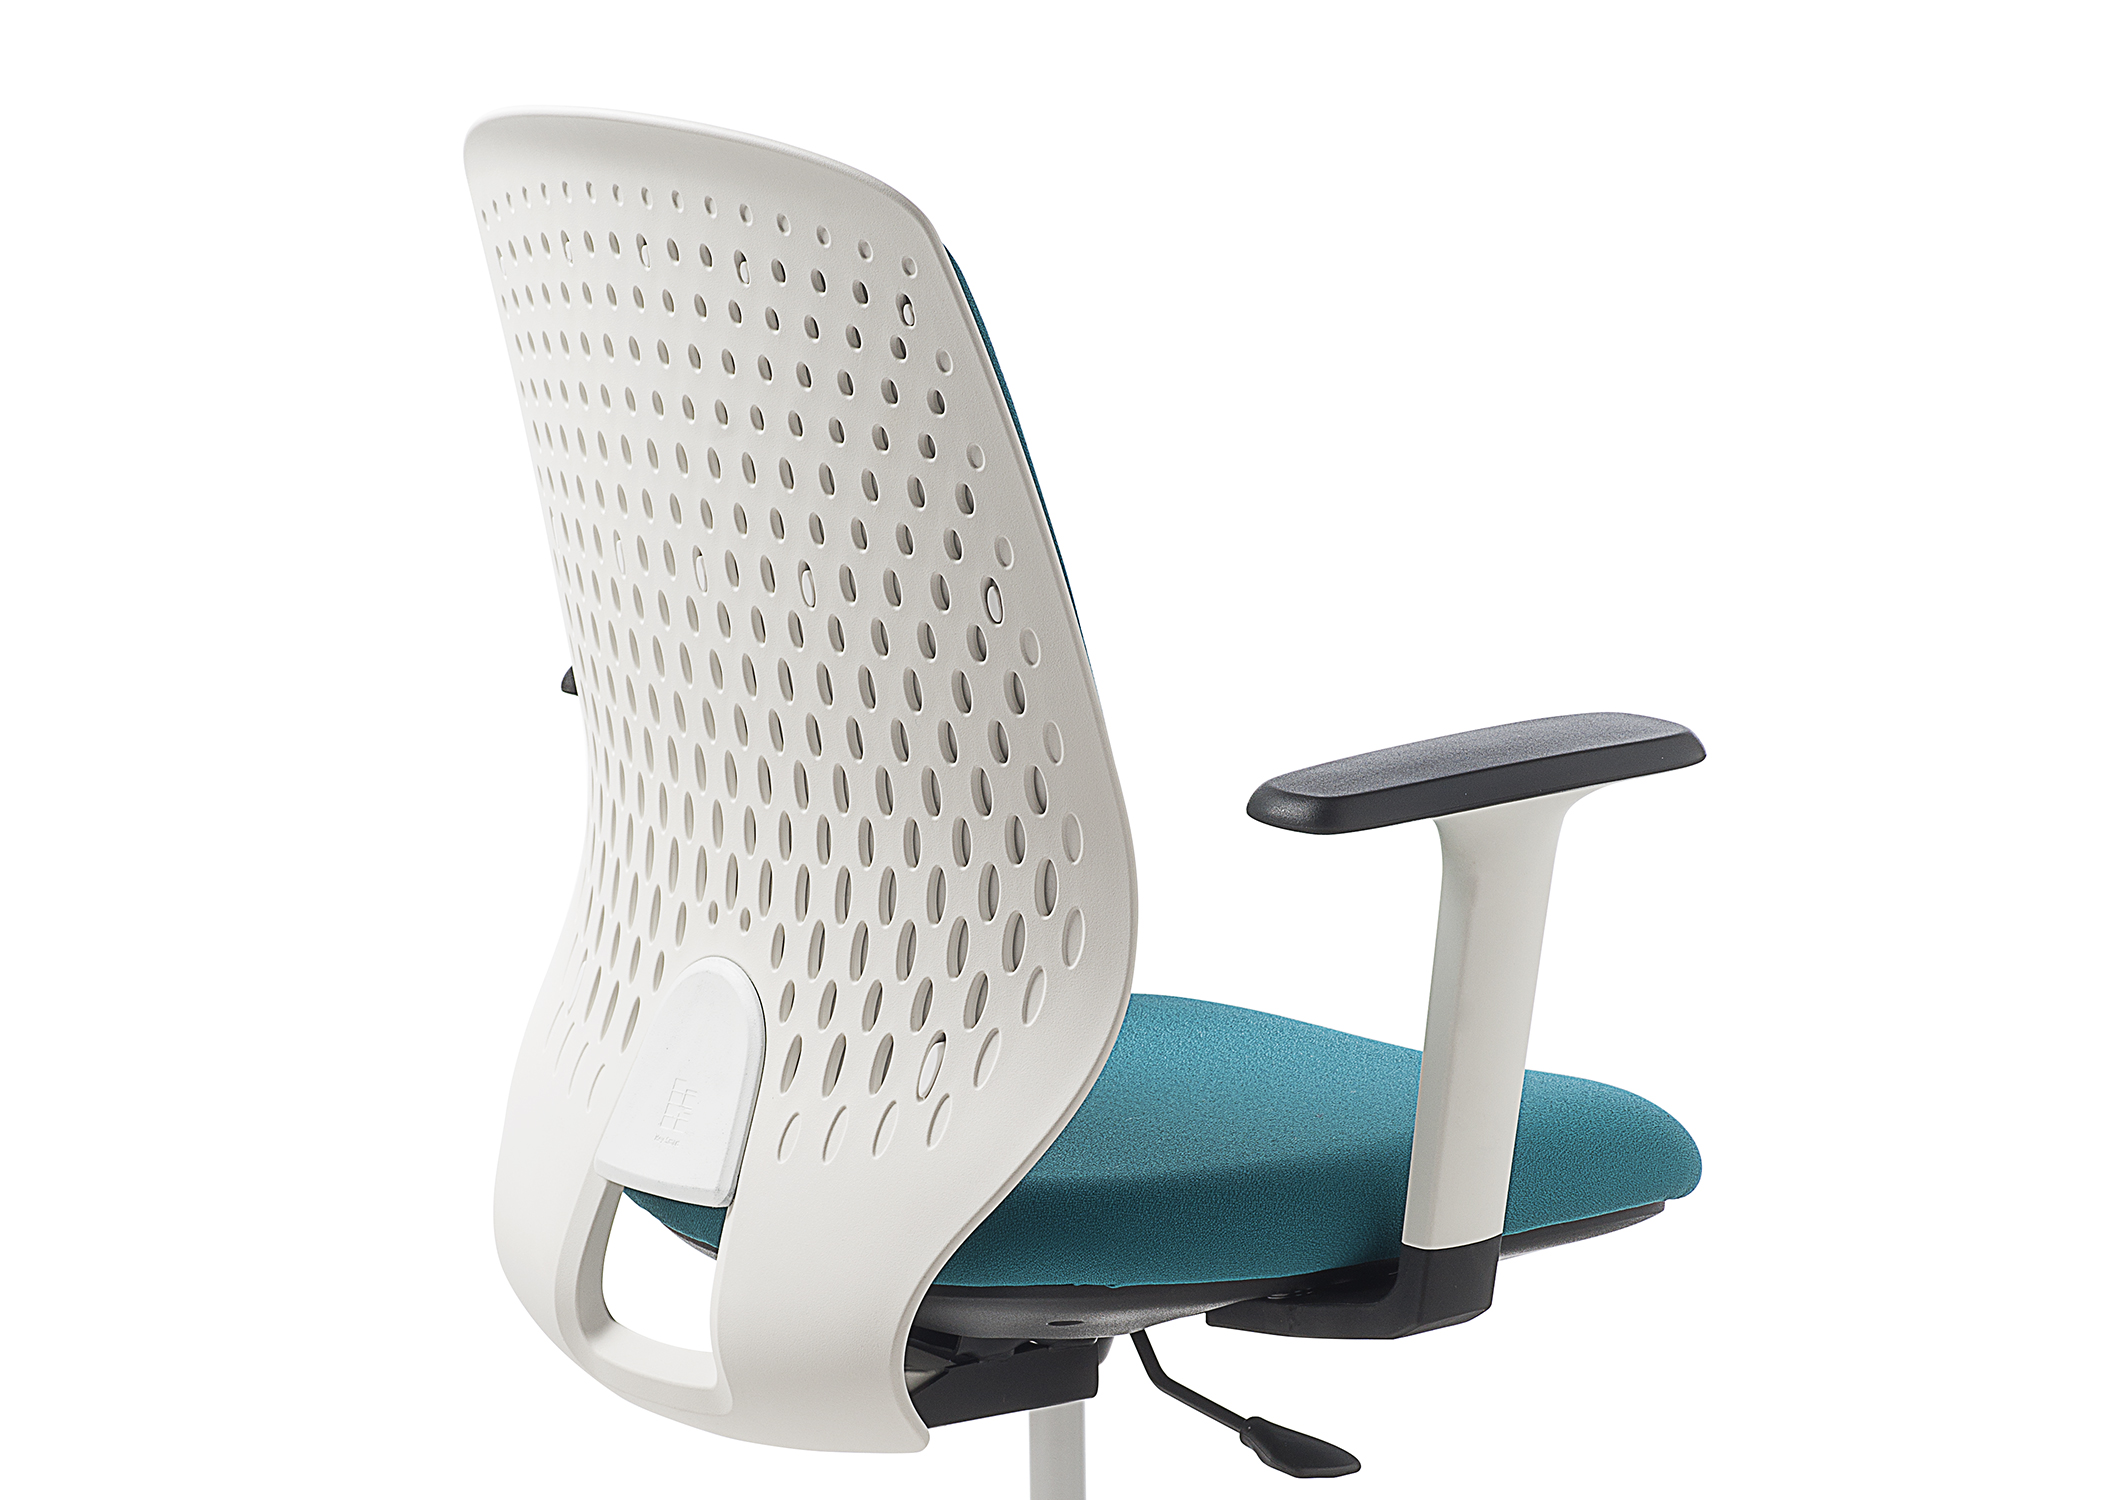 key smart office chair